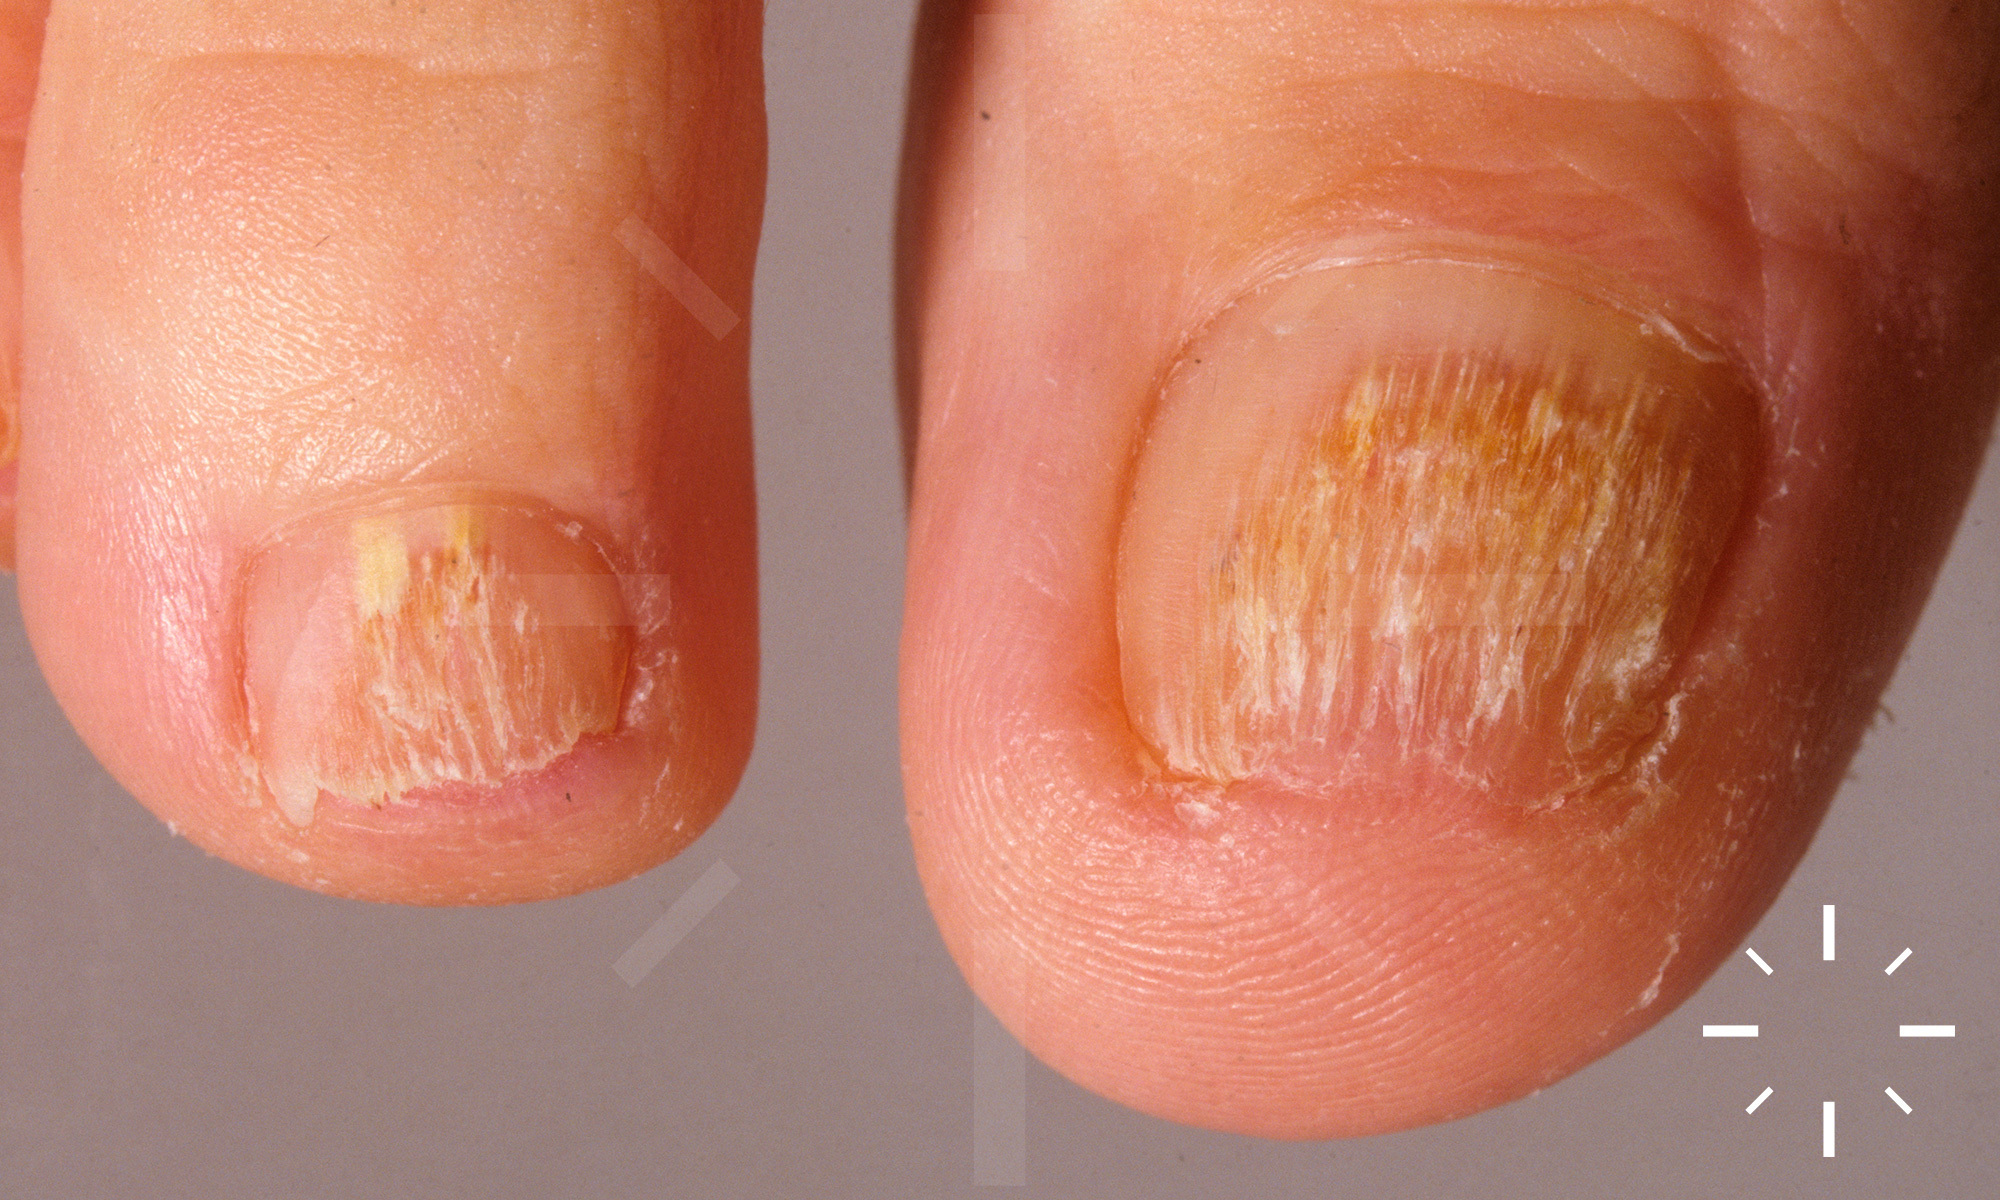 Ingrown toenails - Symptoms & causes - Mayo Clinic